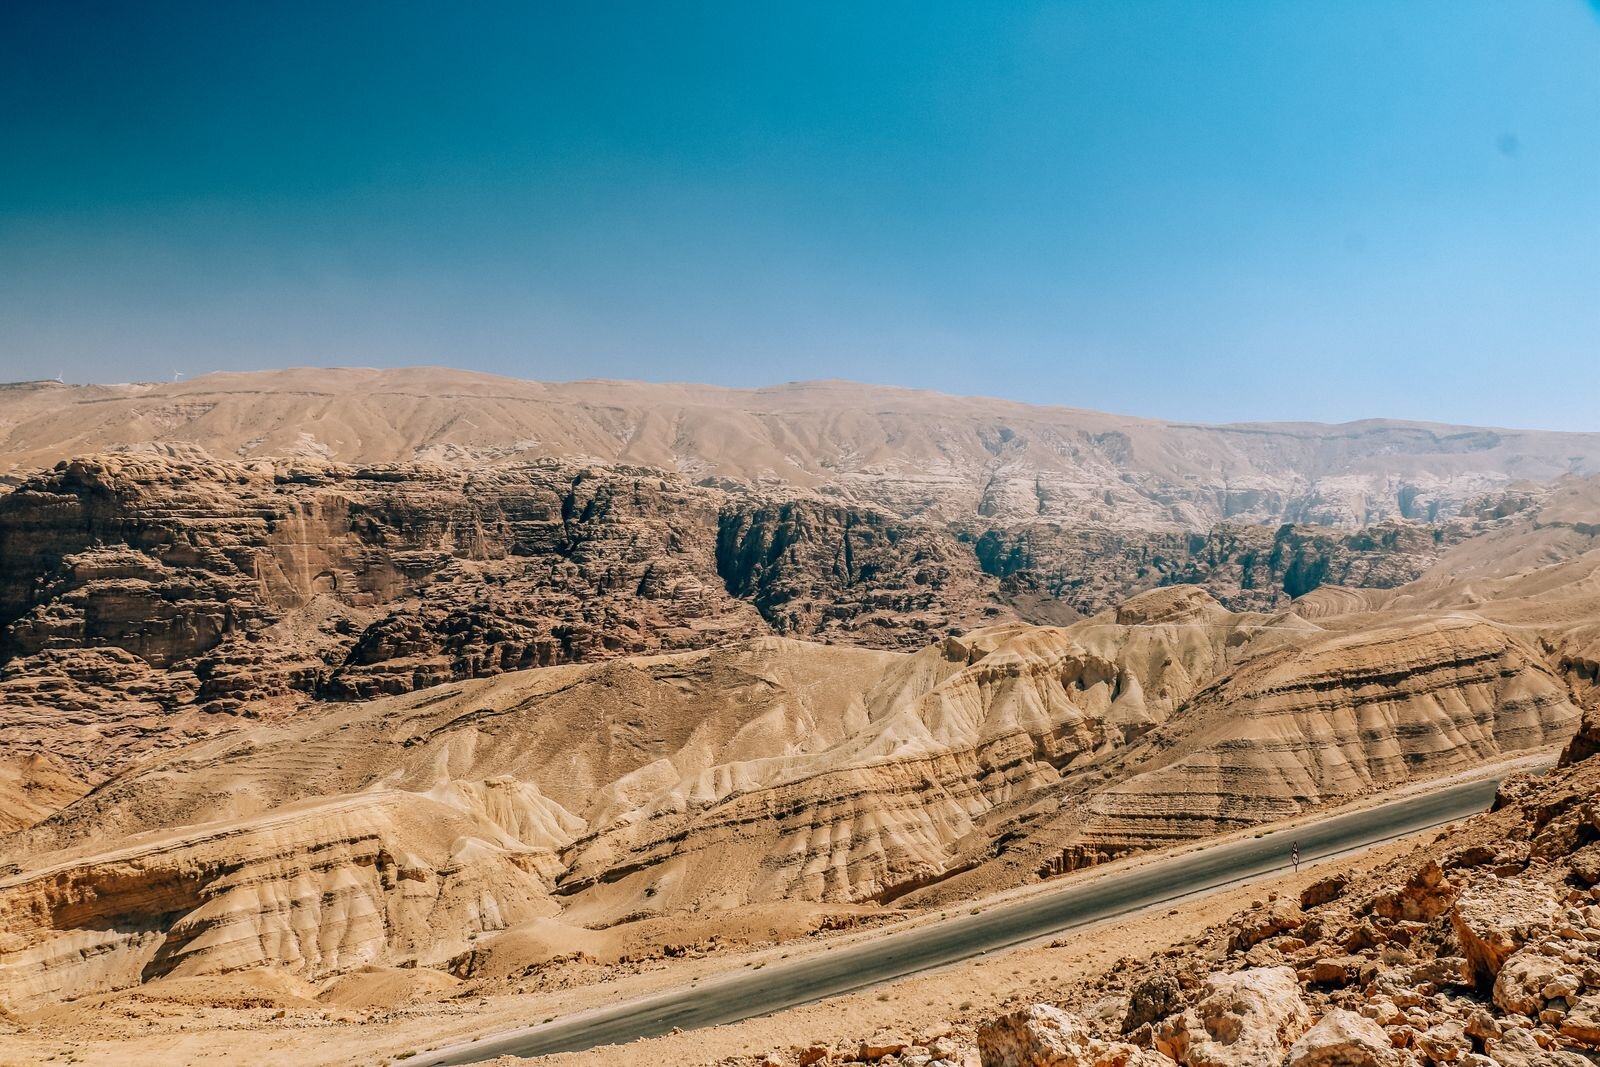 Driving through the mountains in Jordan